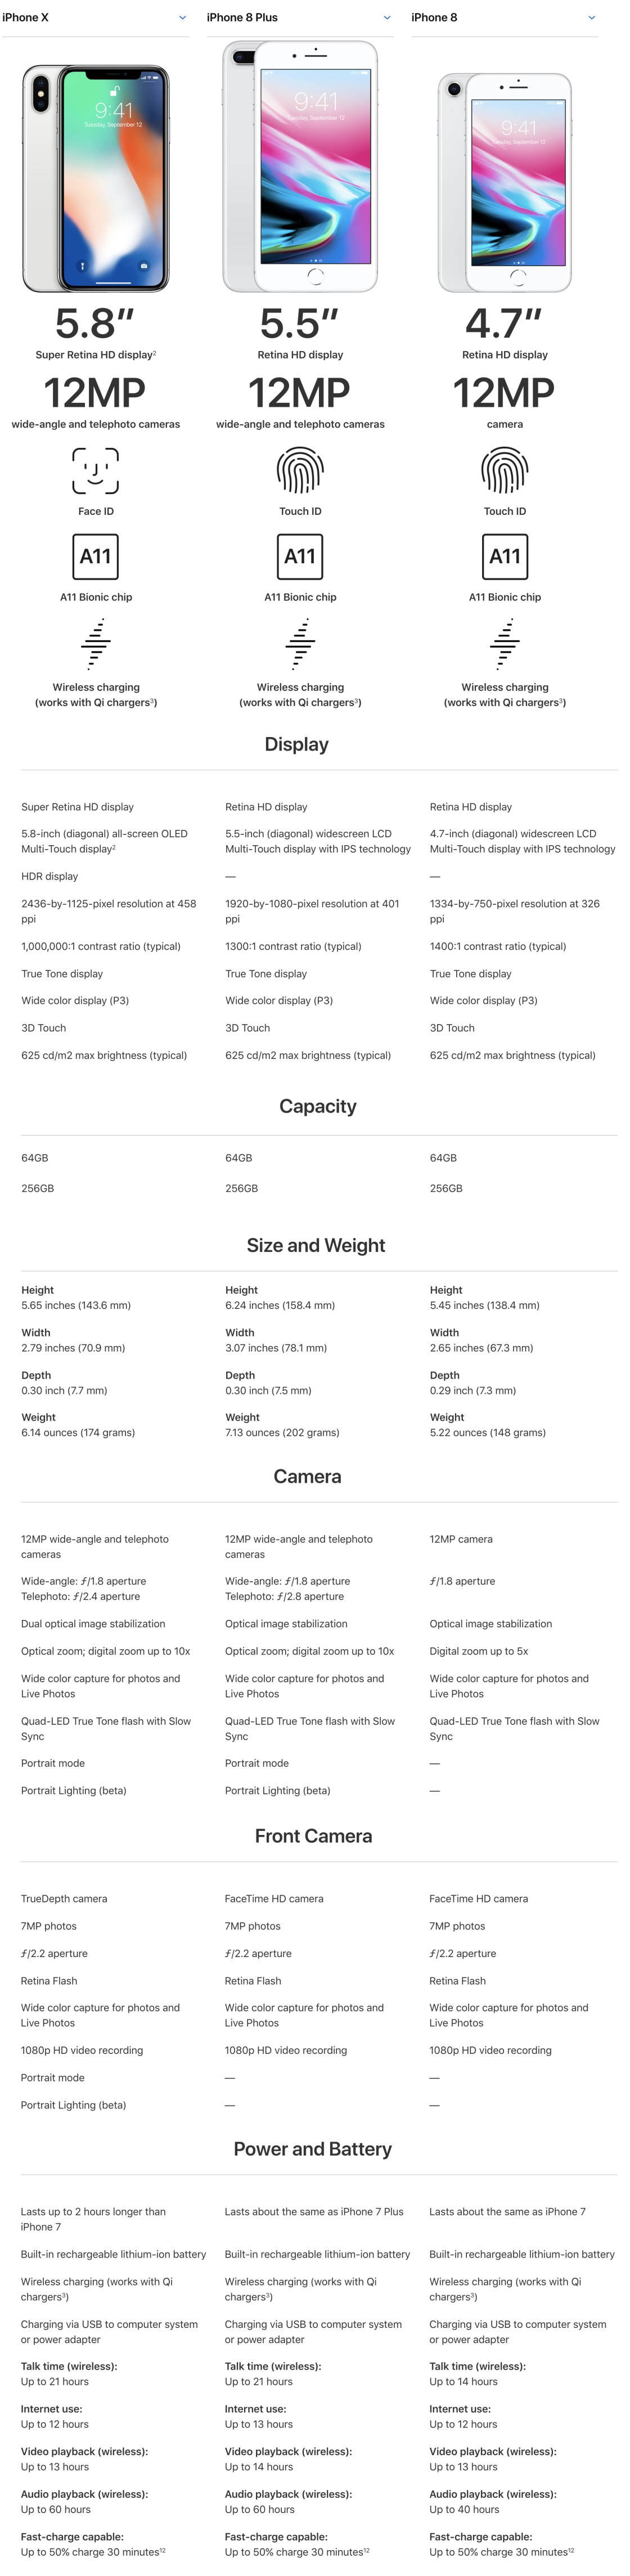 iPhone 8 vs iPhone X Camera